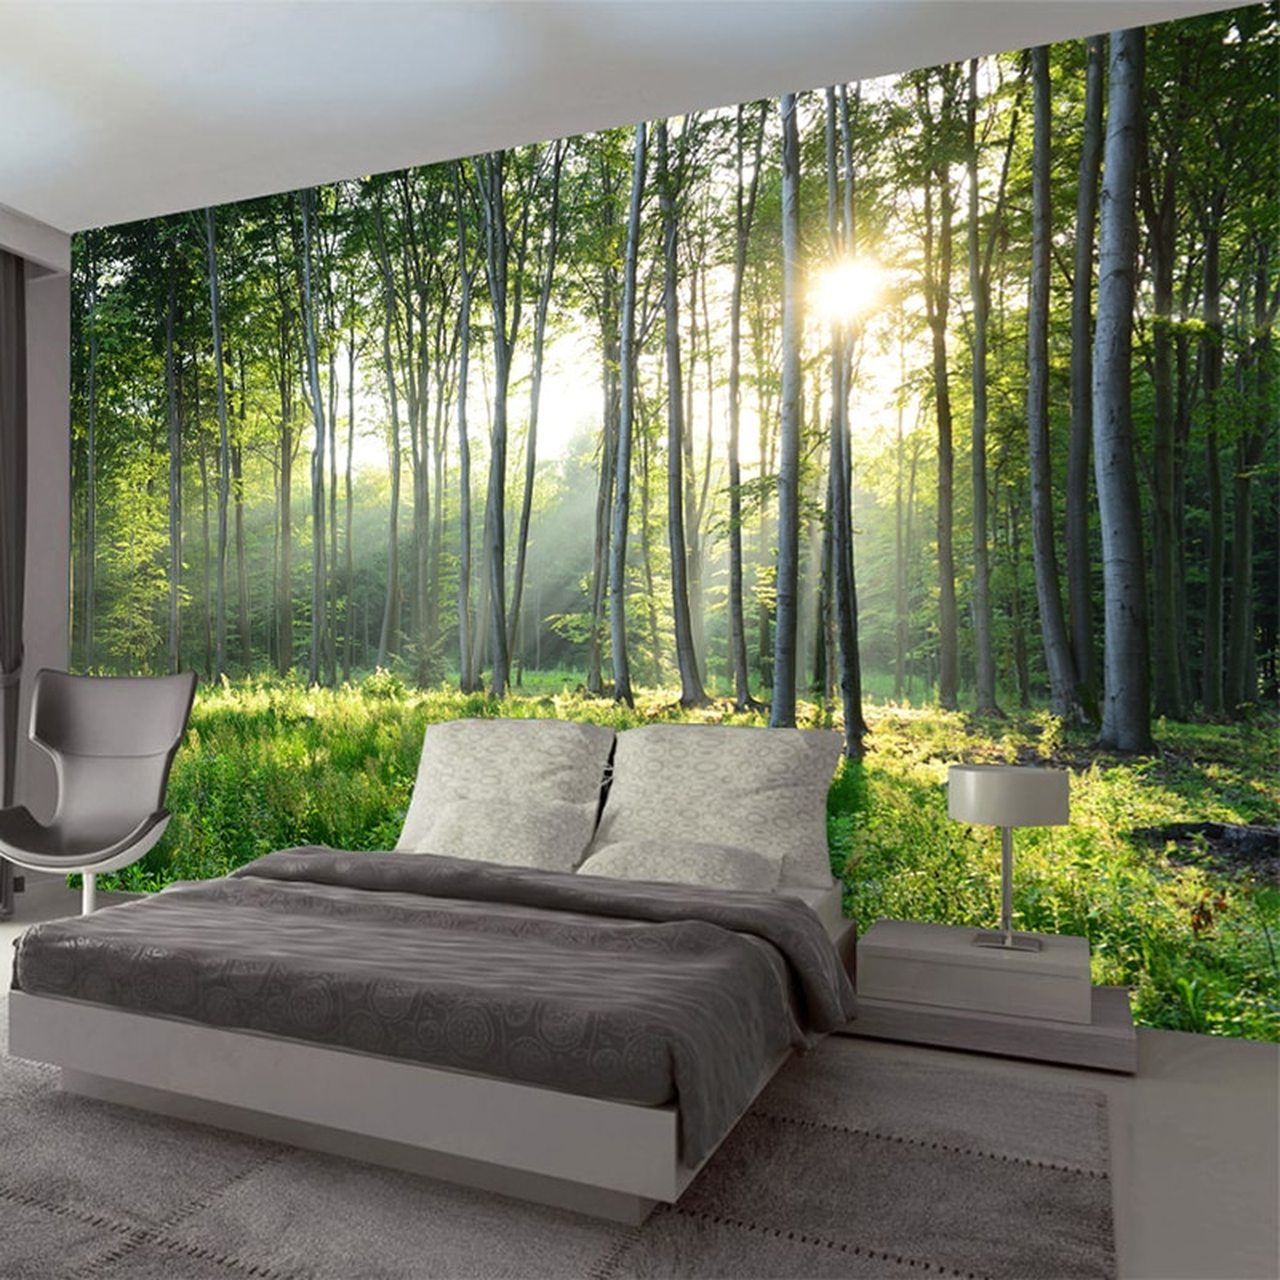 green wallpaper living room,nature,natural landscape,wall,tree,furniture